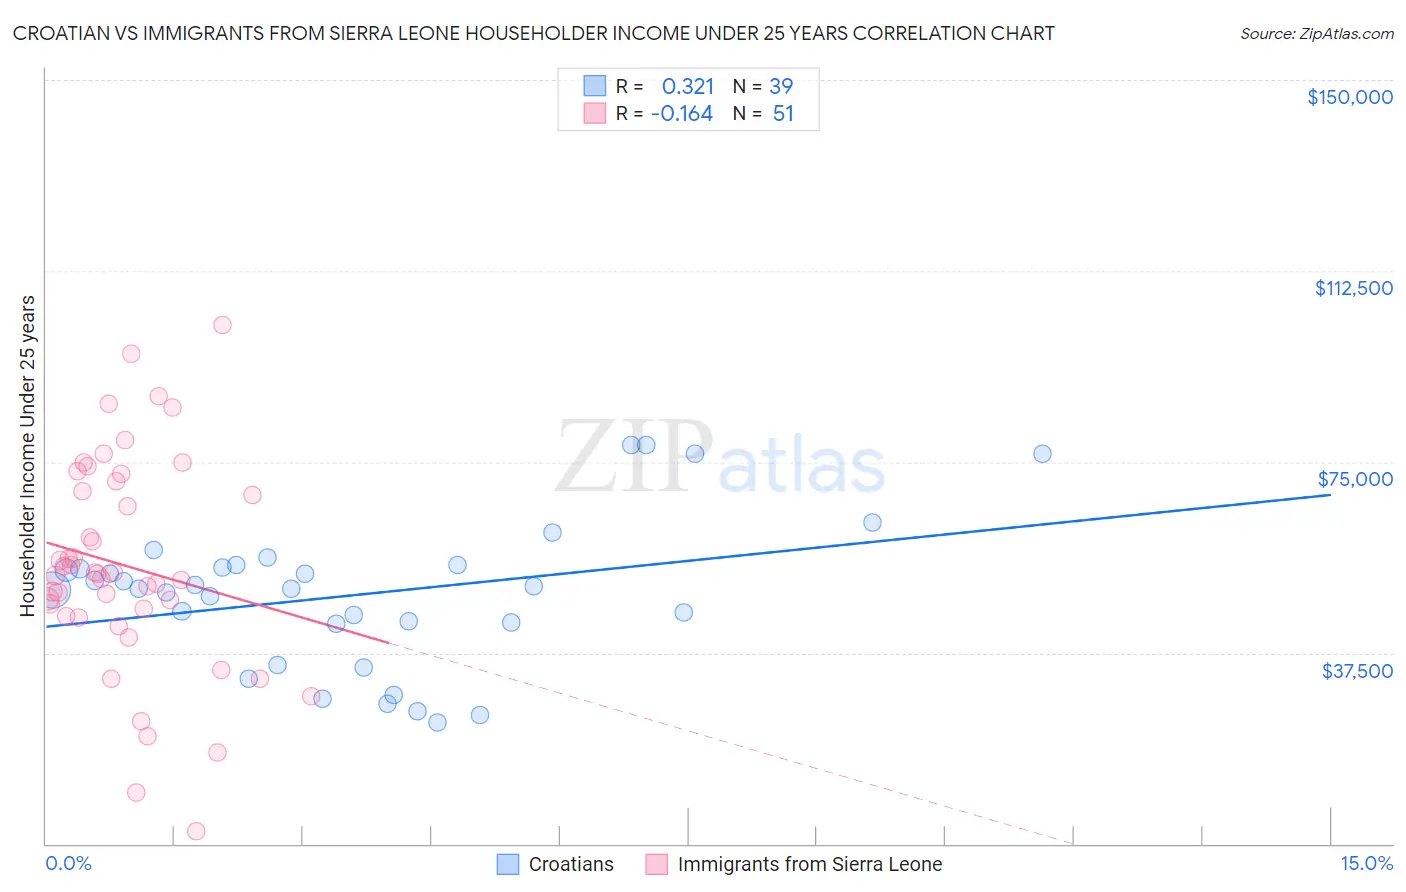 Croatian vs Immigrants from Sierra Leone Householder Income Under 25 years